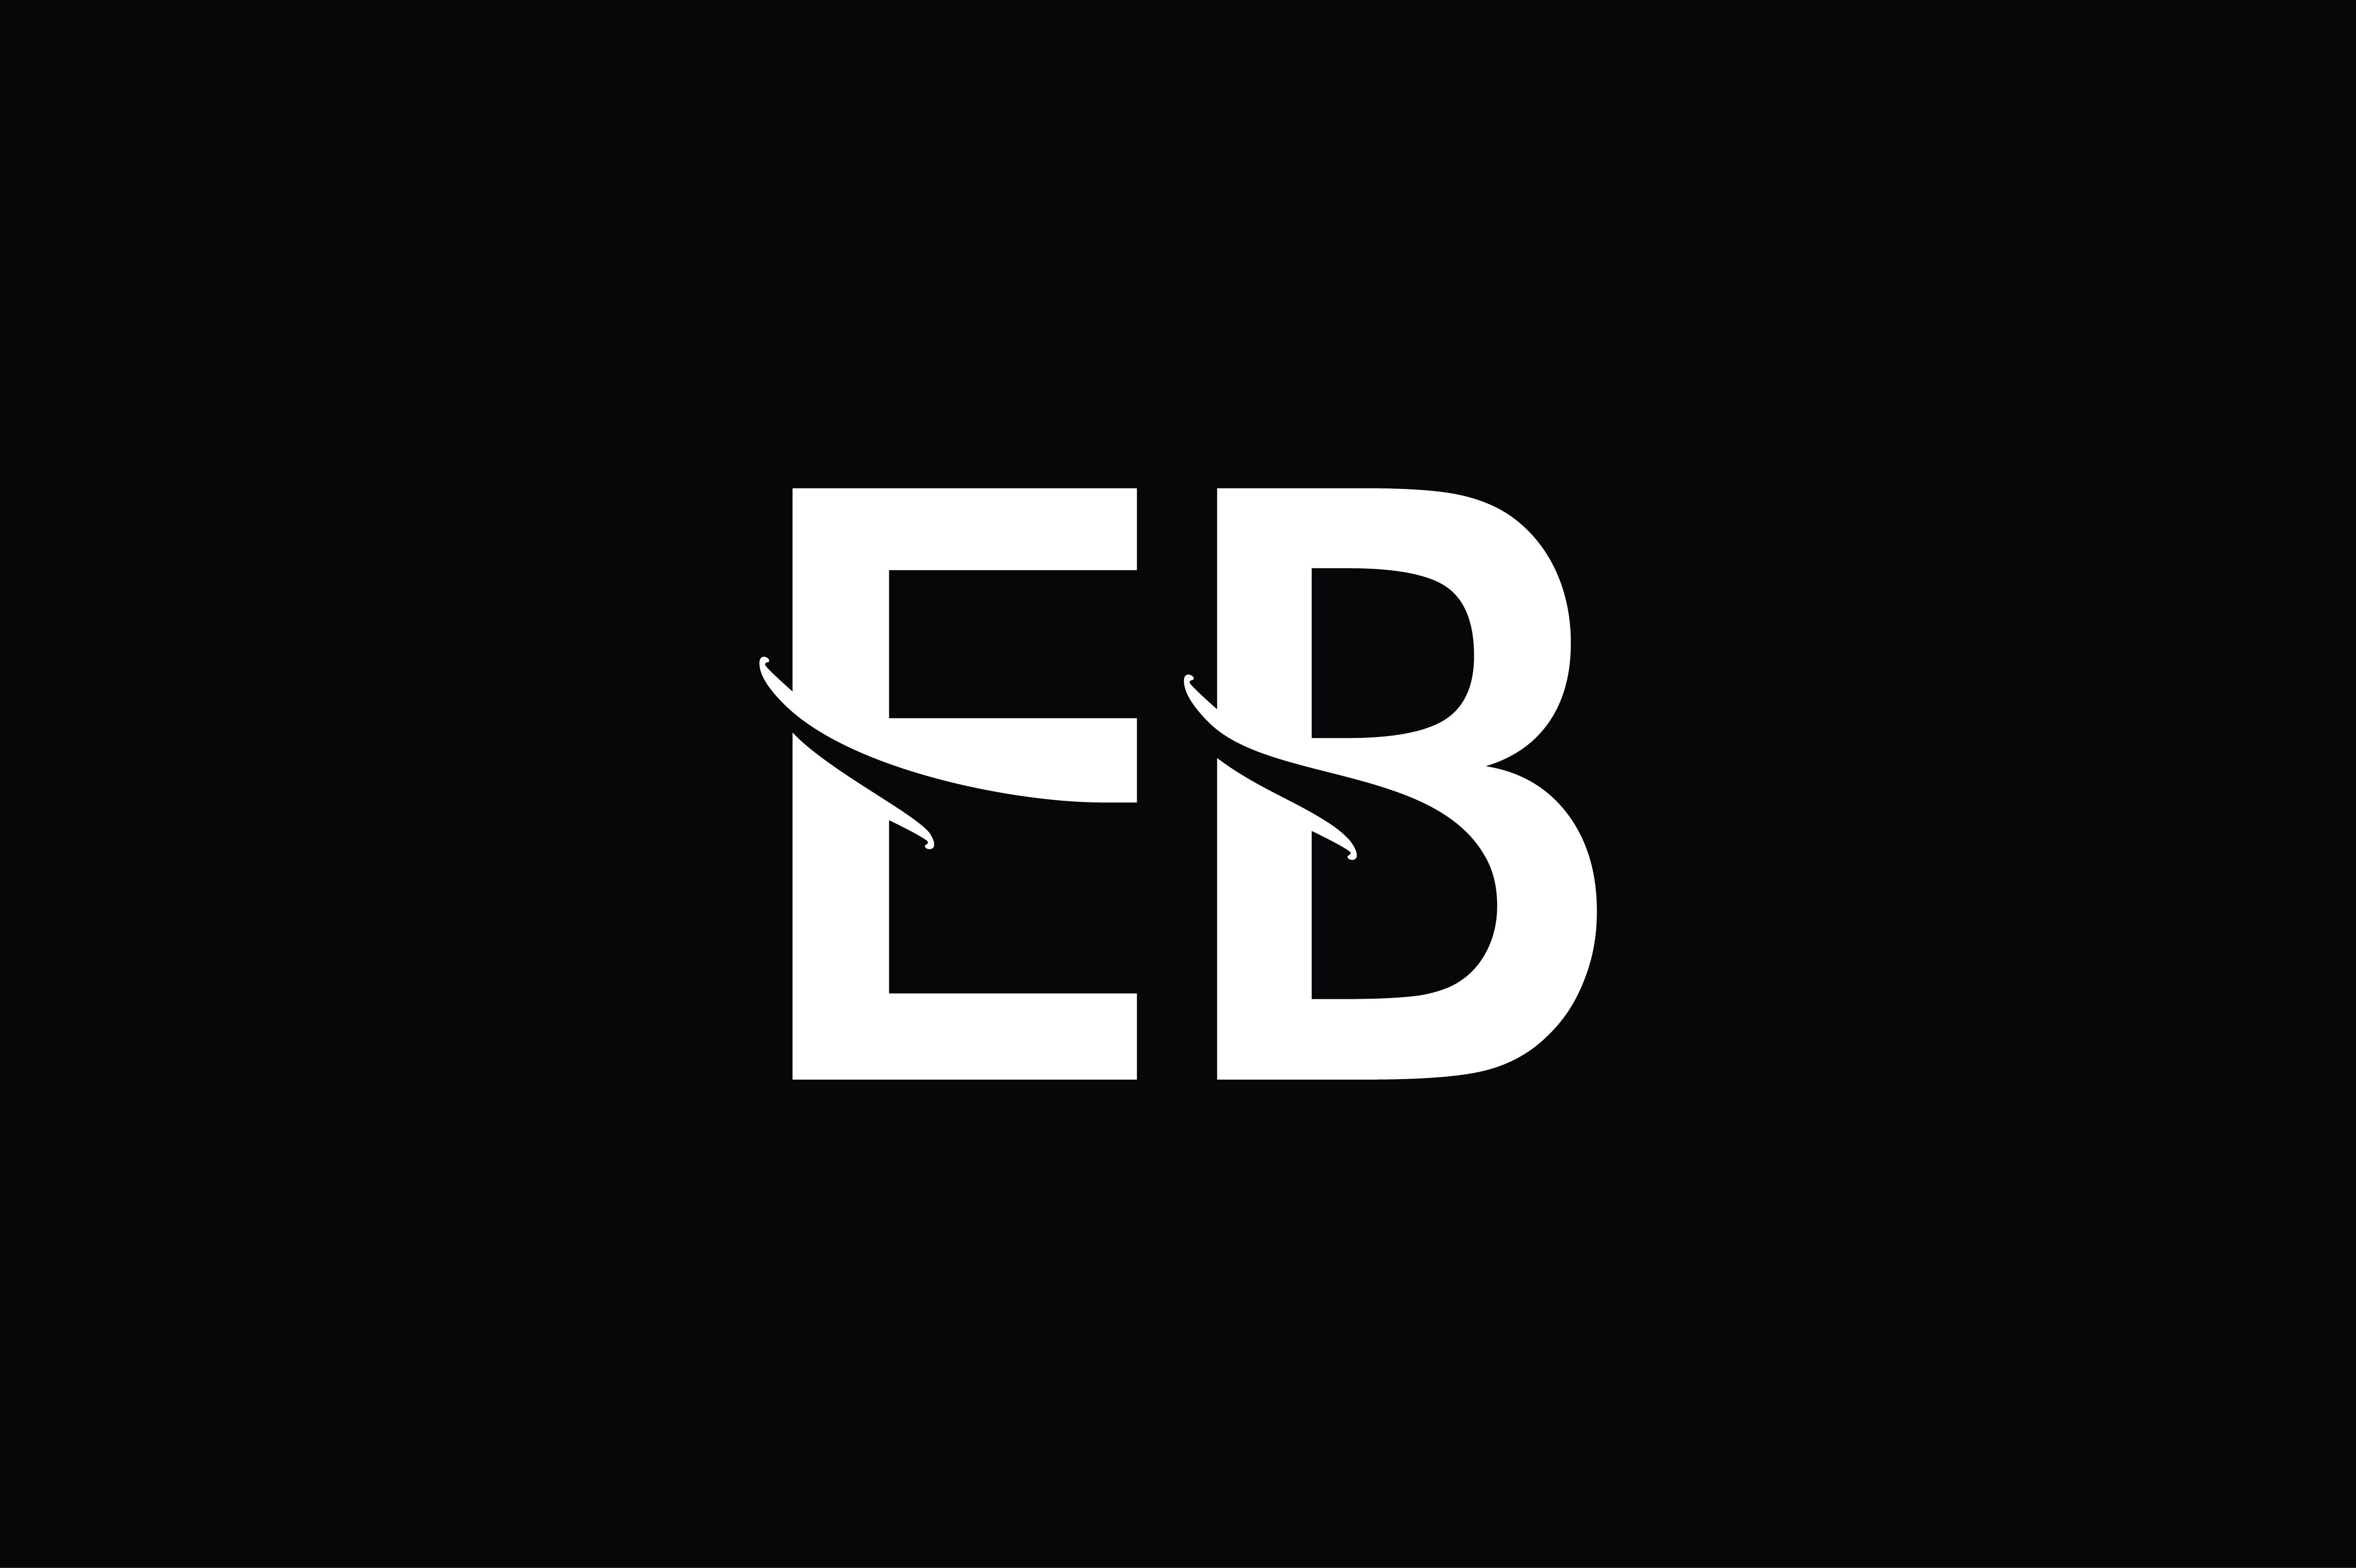 eb-monogram-logo-design-by-vectorseller-thehungryjpeg